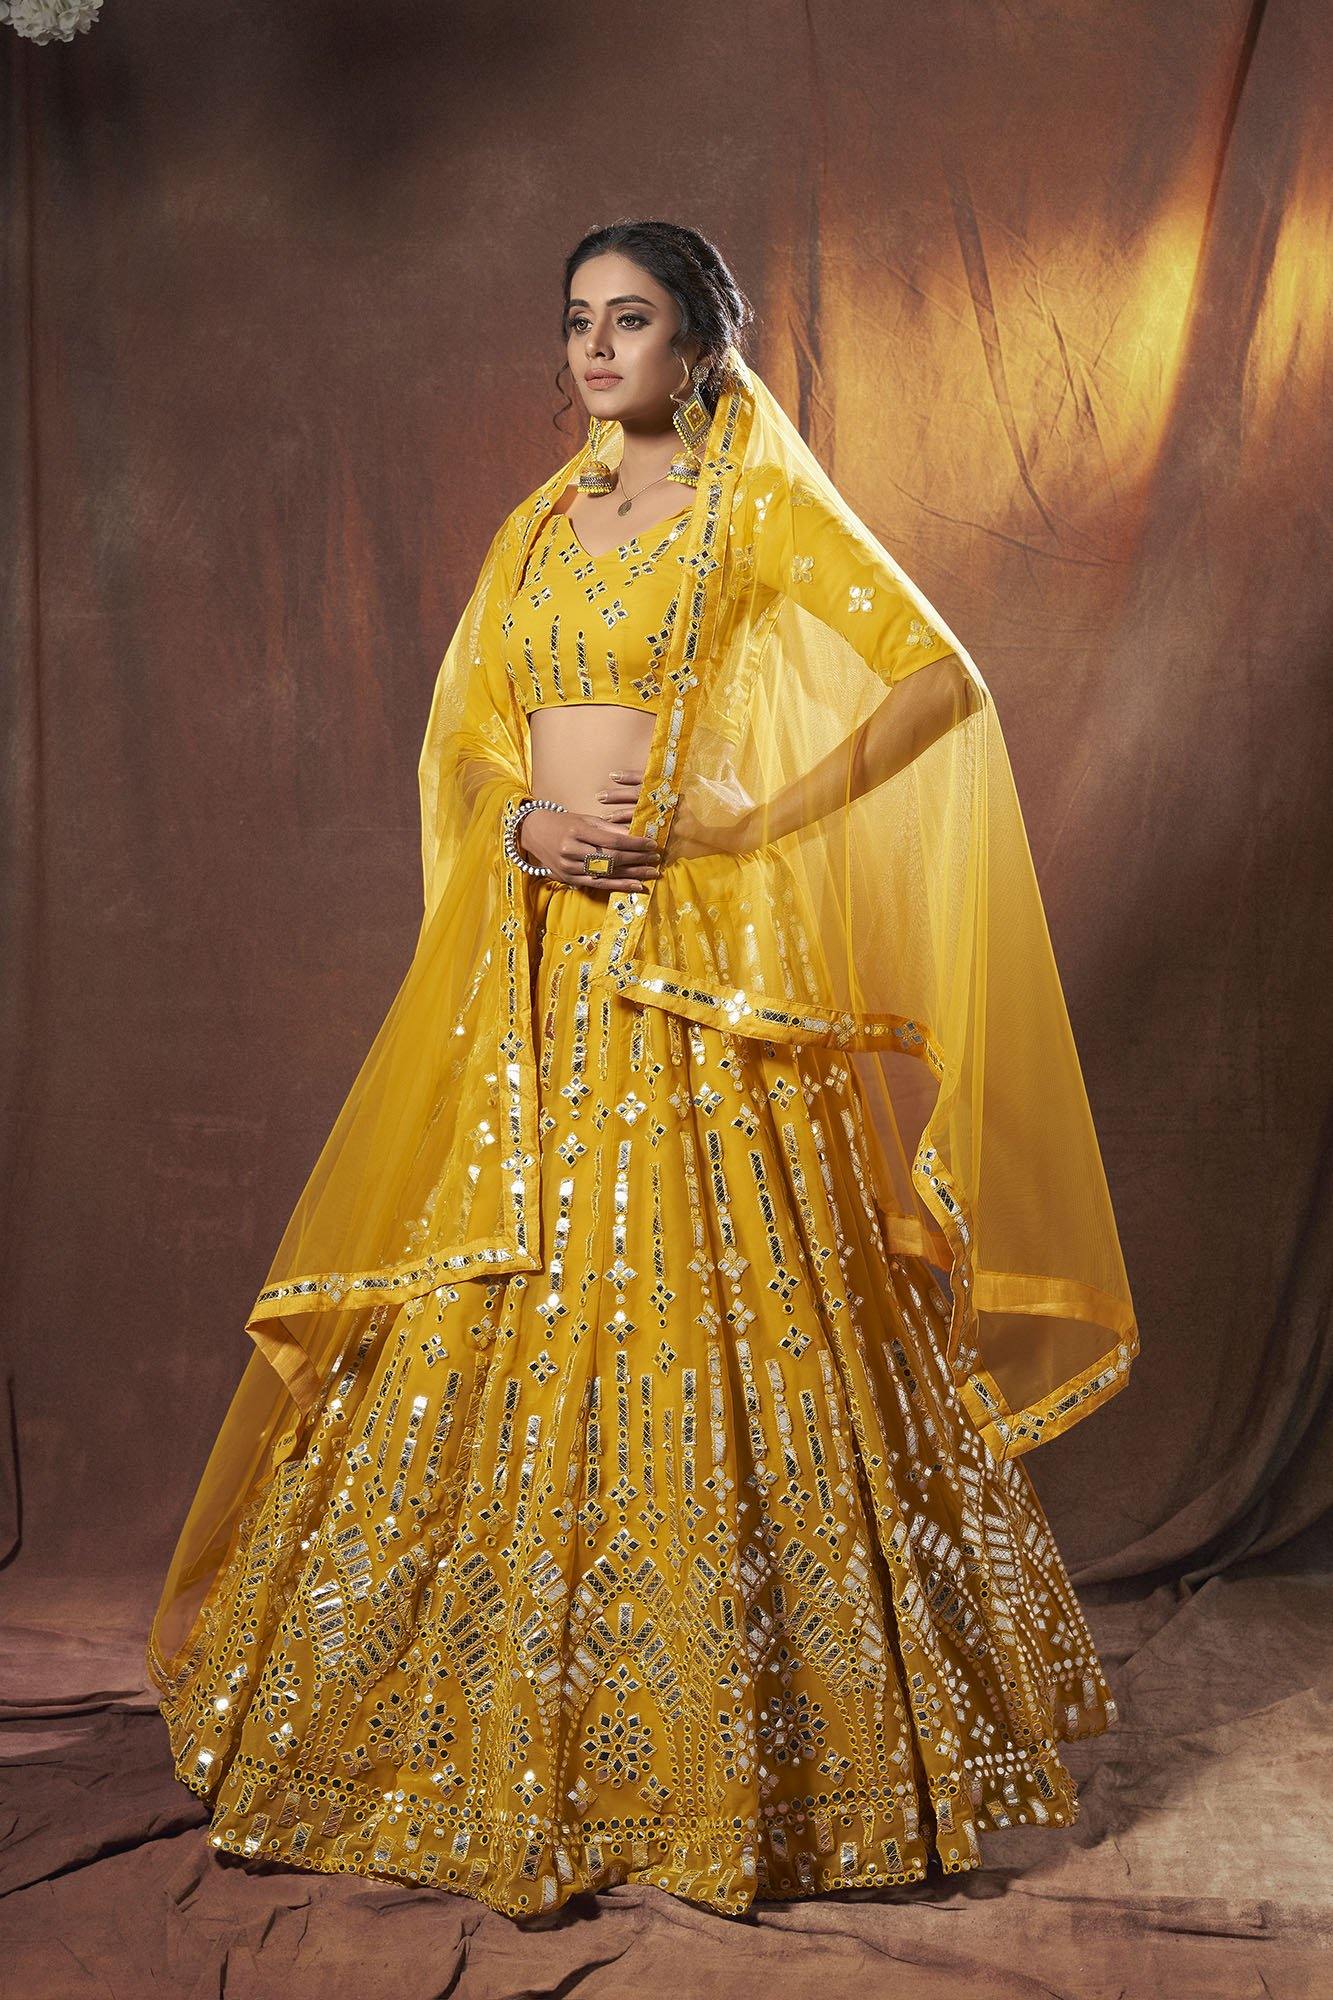 Indian Bride Wearing Yellow Saree Red Stock Photo 1366172195 | Shutterstock